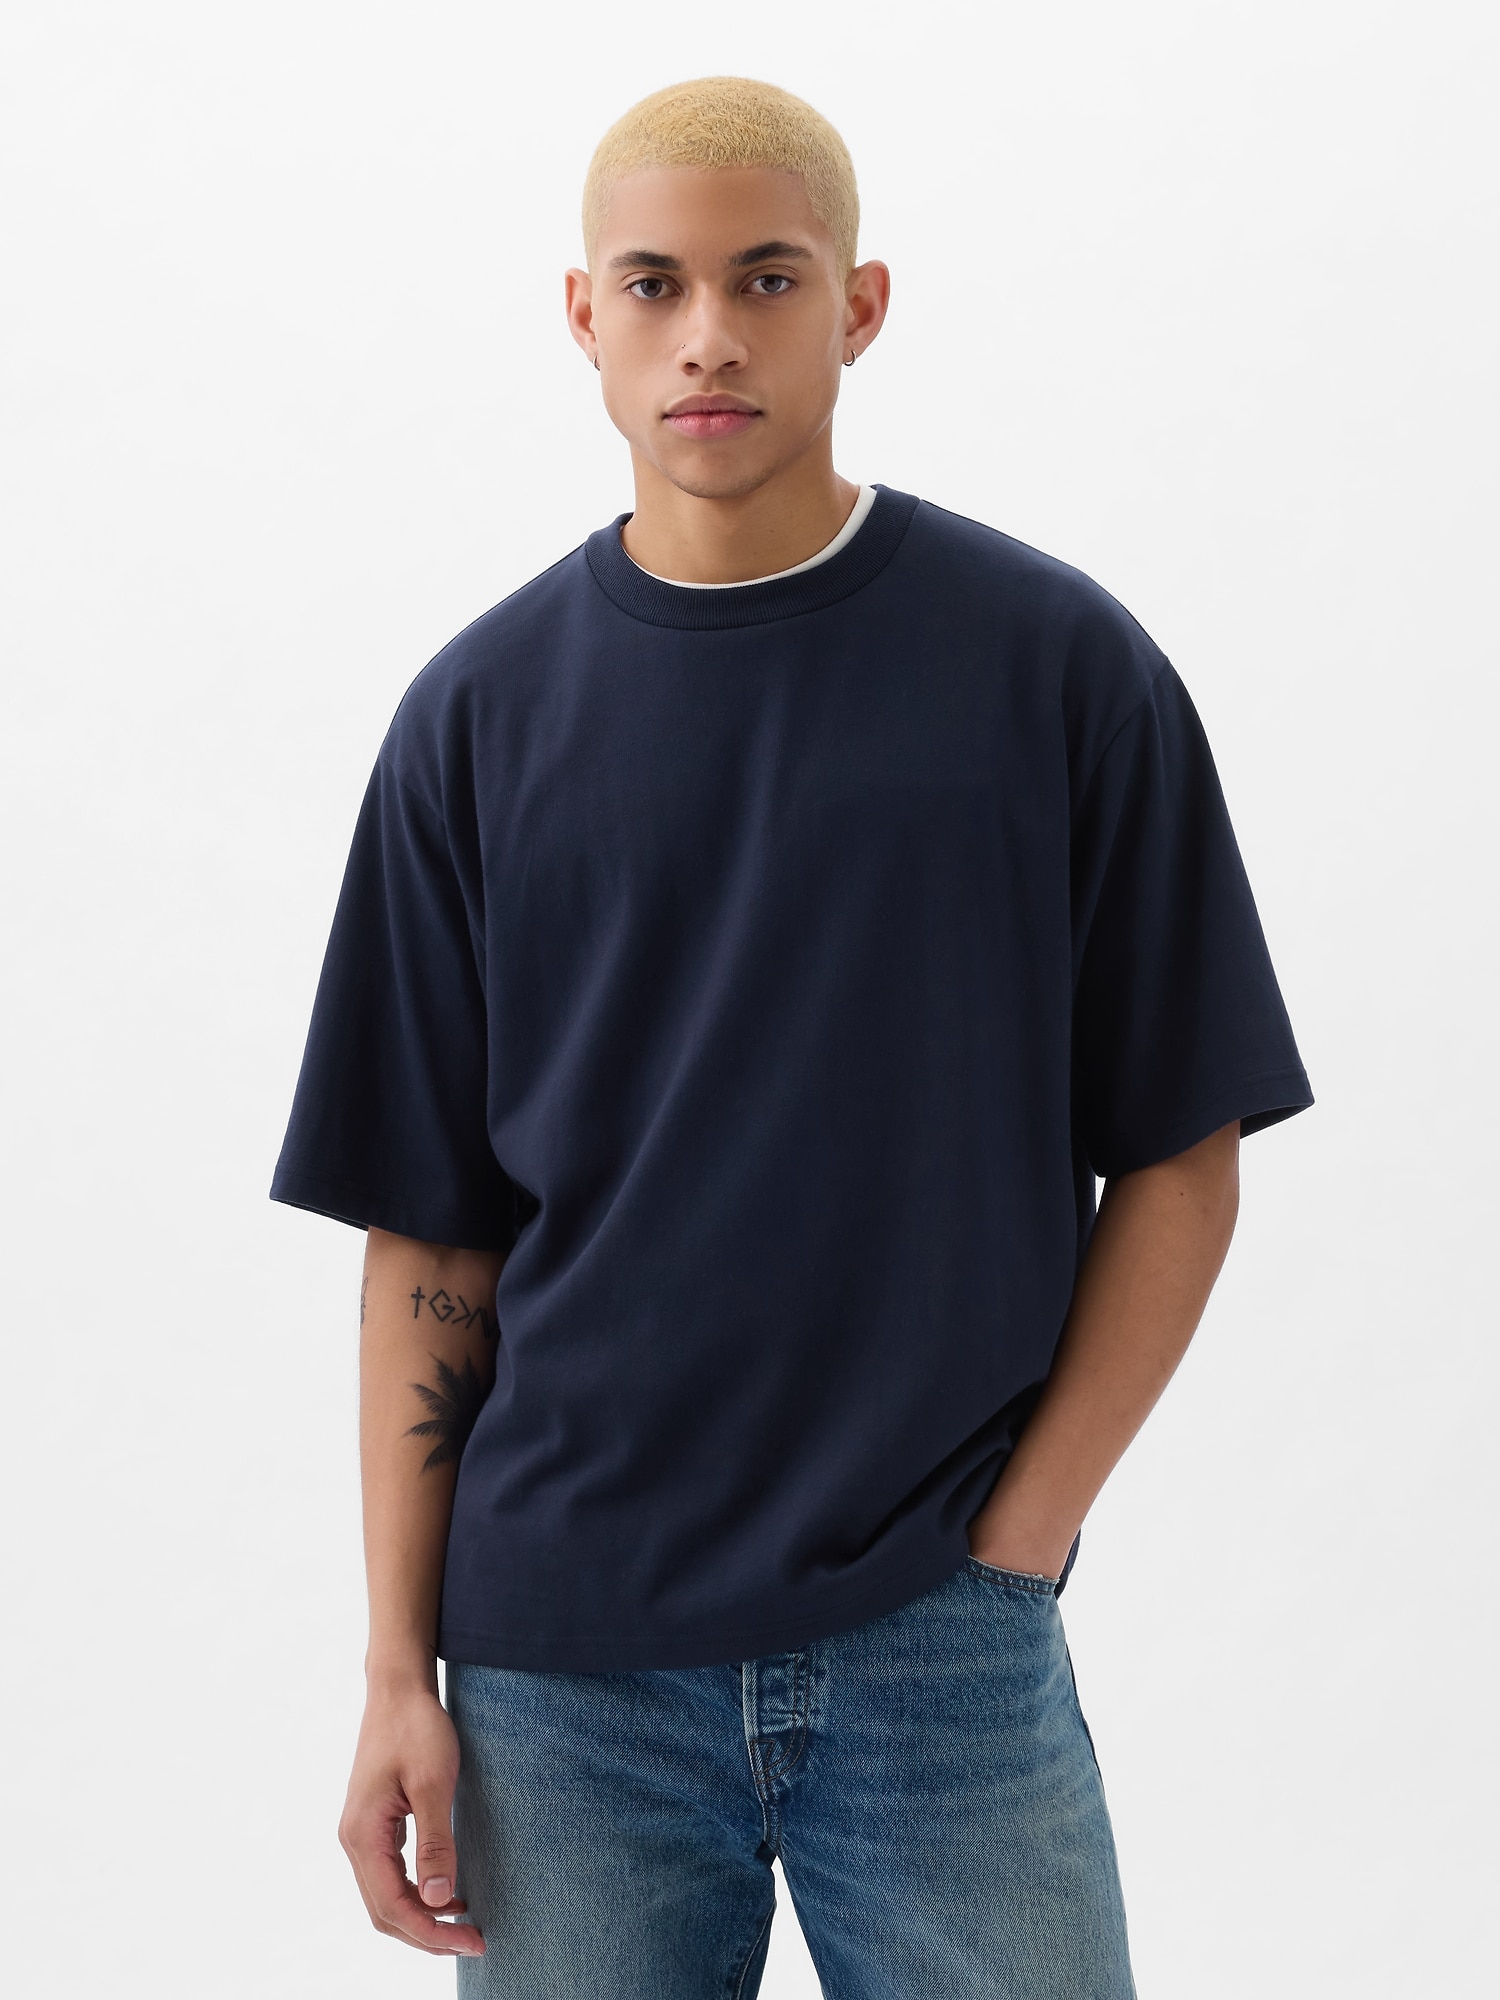 Gap公式オンラインストア | オーバーサイズ Tシャツ(ユニセックス)